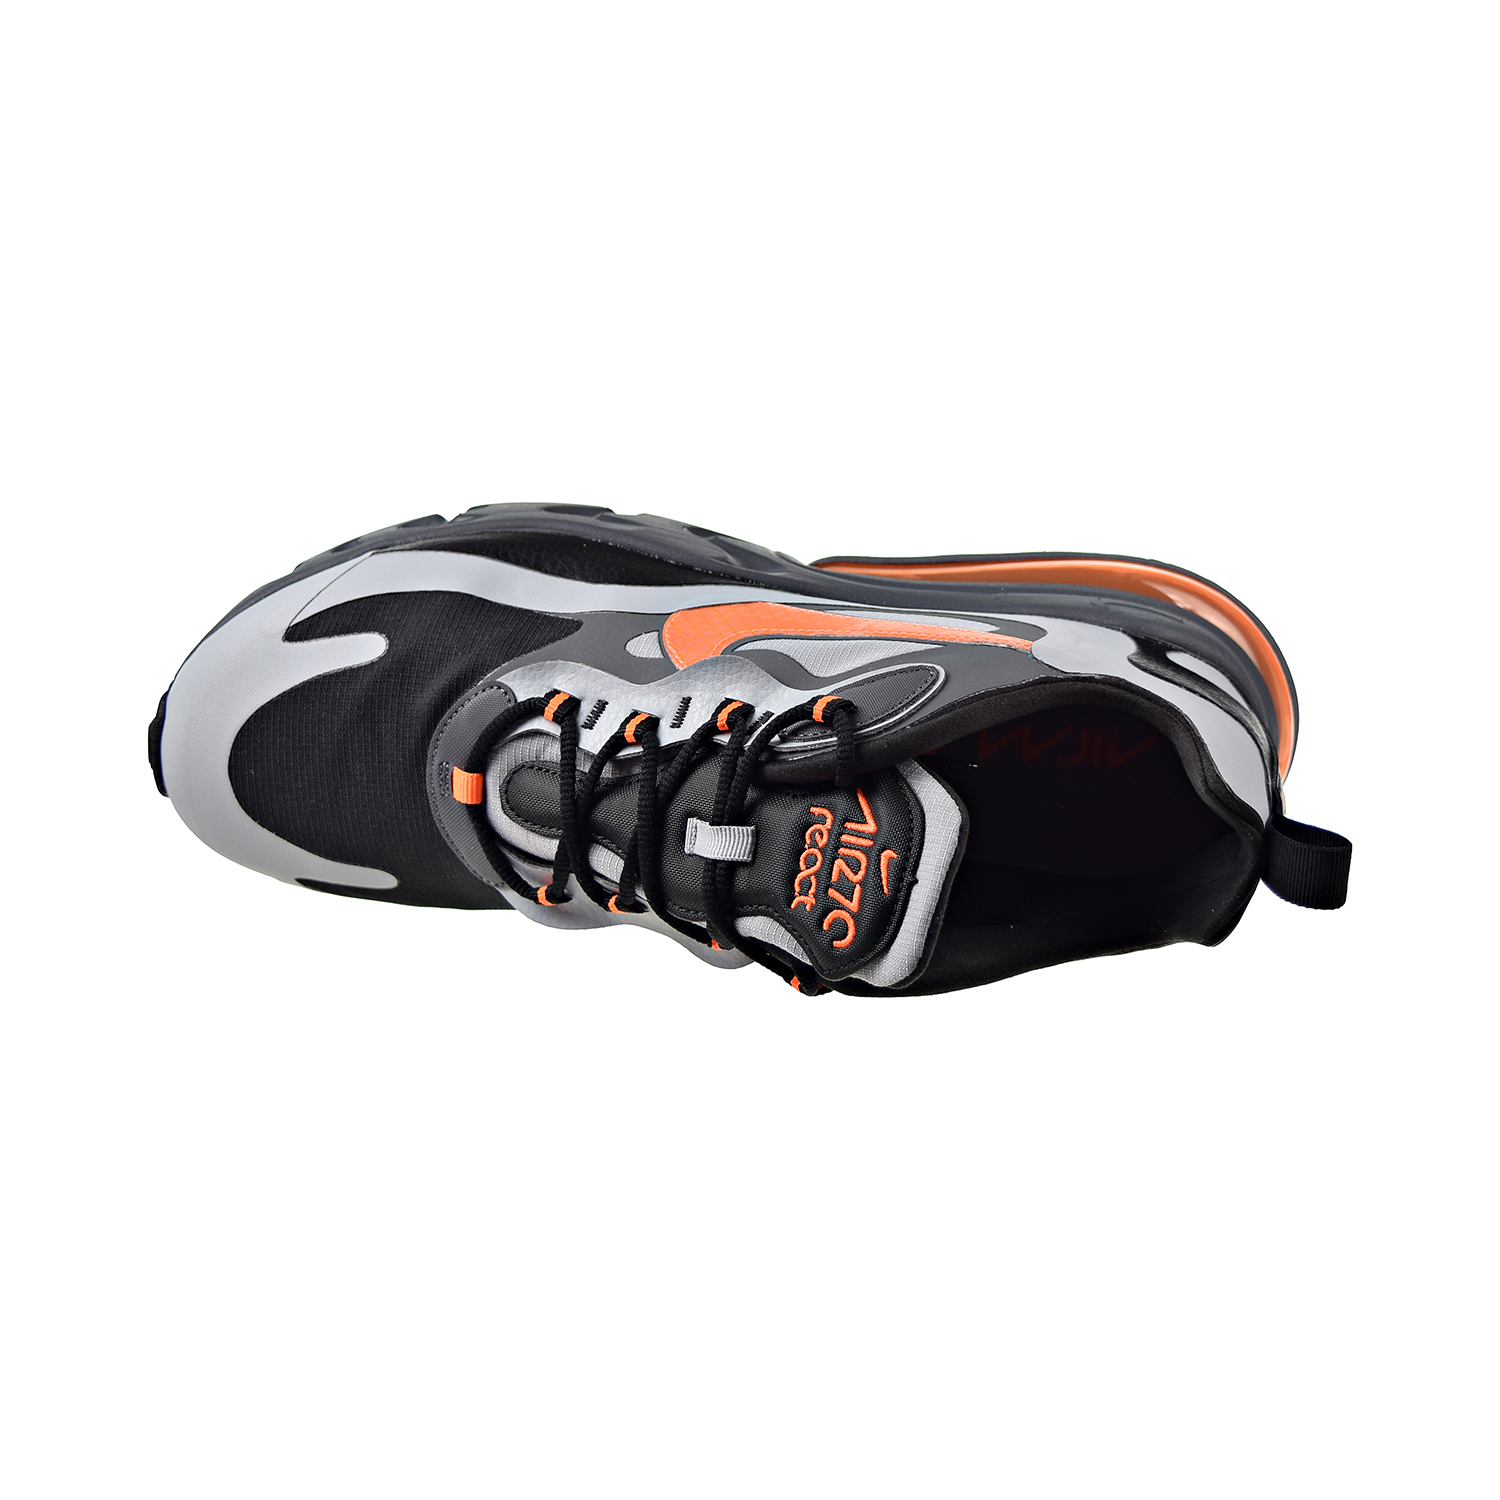 Nike Air Max 270 React Winter Casual Men's Shoes Wolf Grey-Total Orange-Black cd2049-006 - image 5 of 6